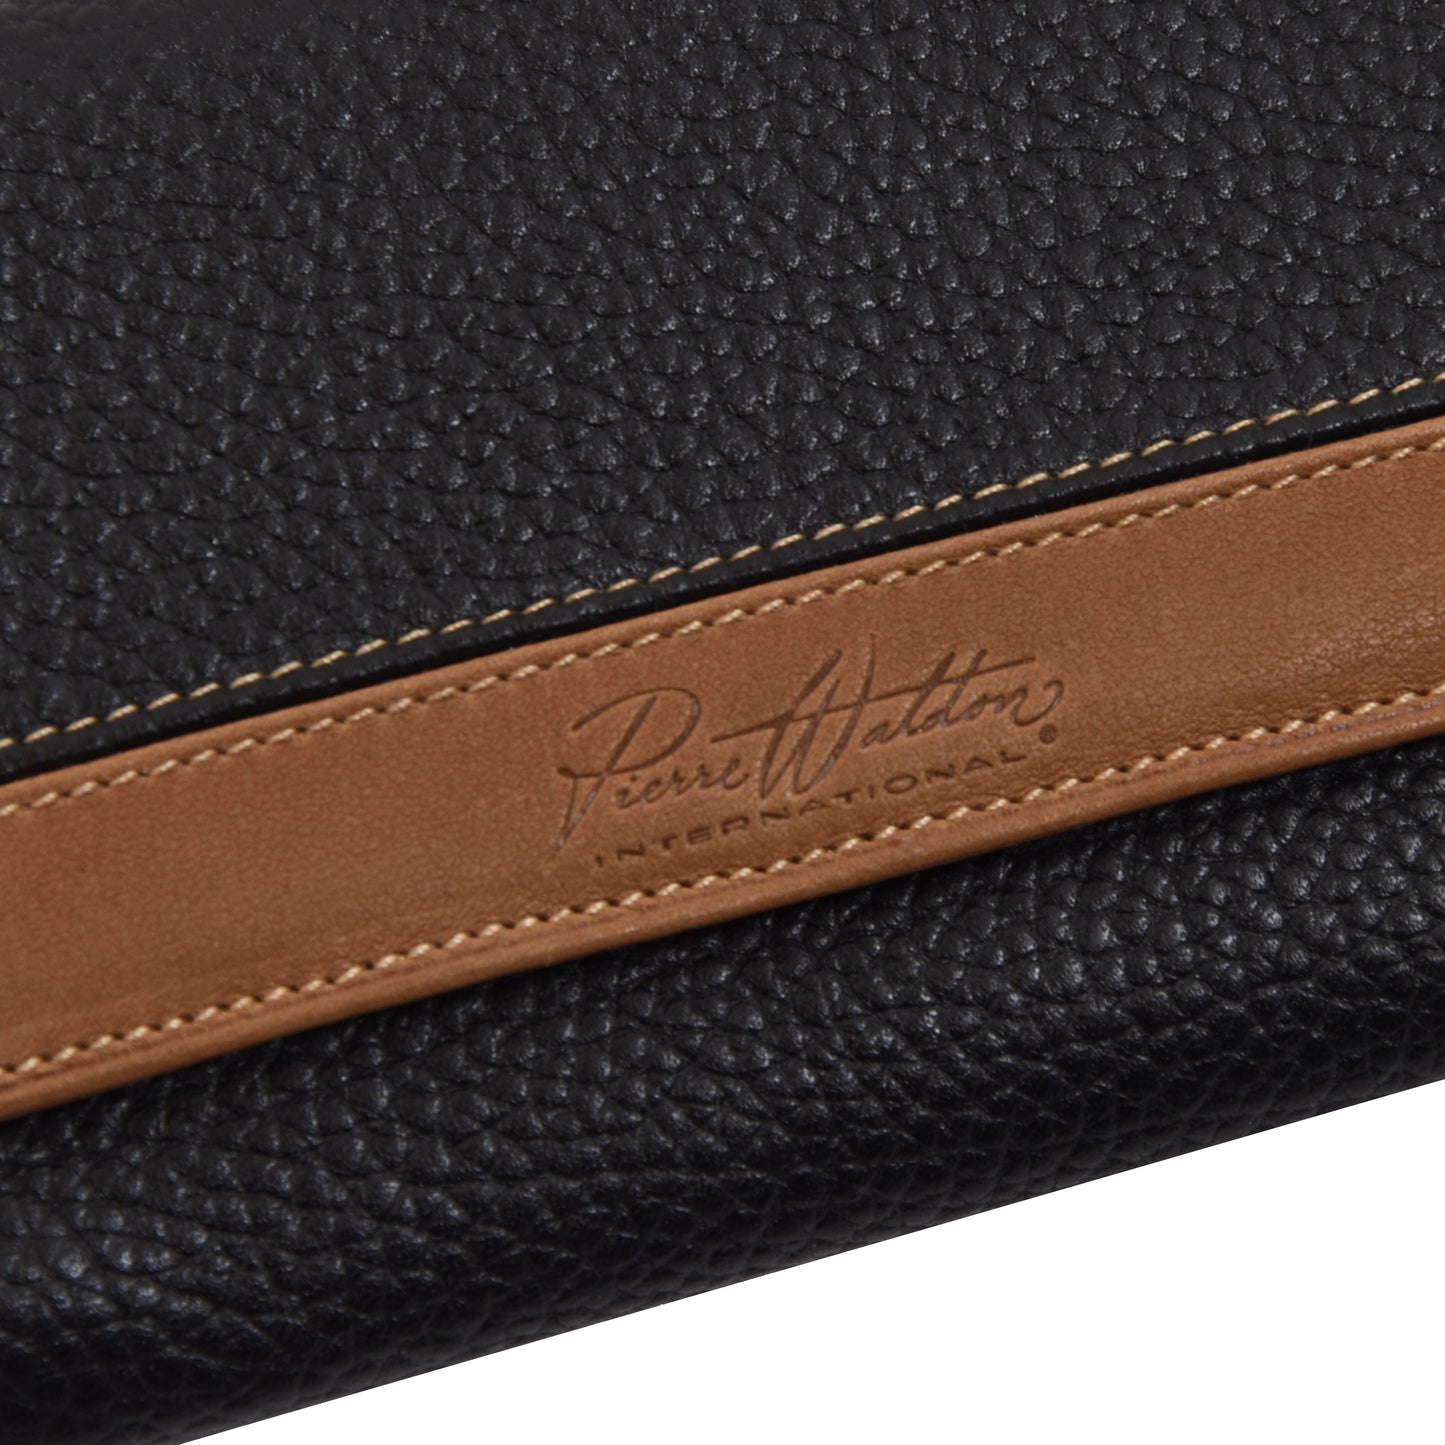 Pierre Waldon Leather Wallet - Black & Tan